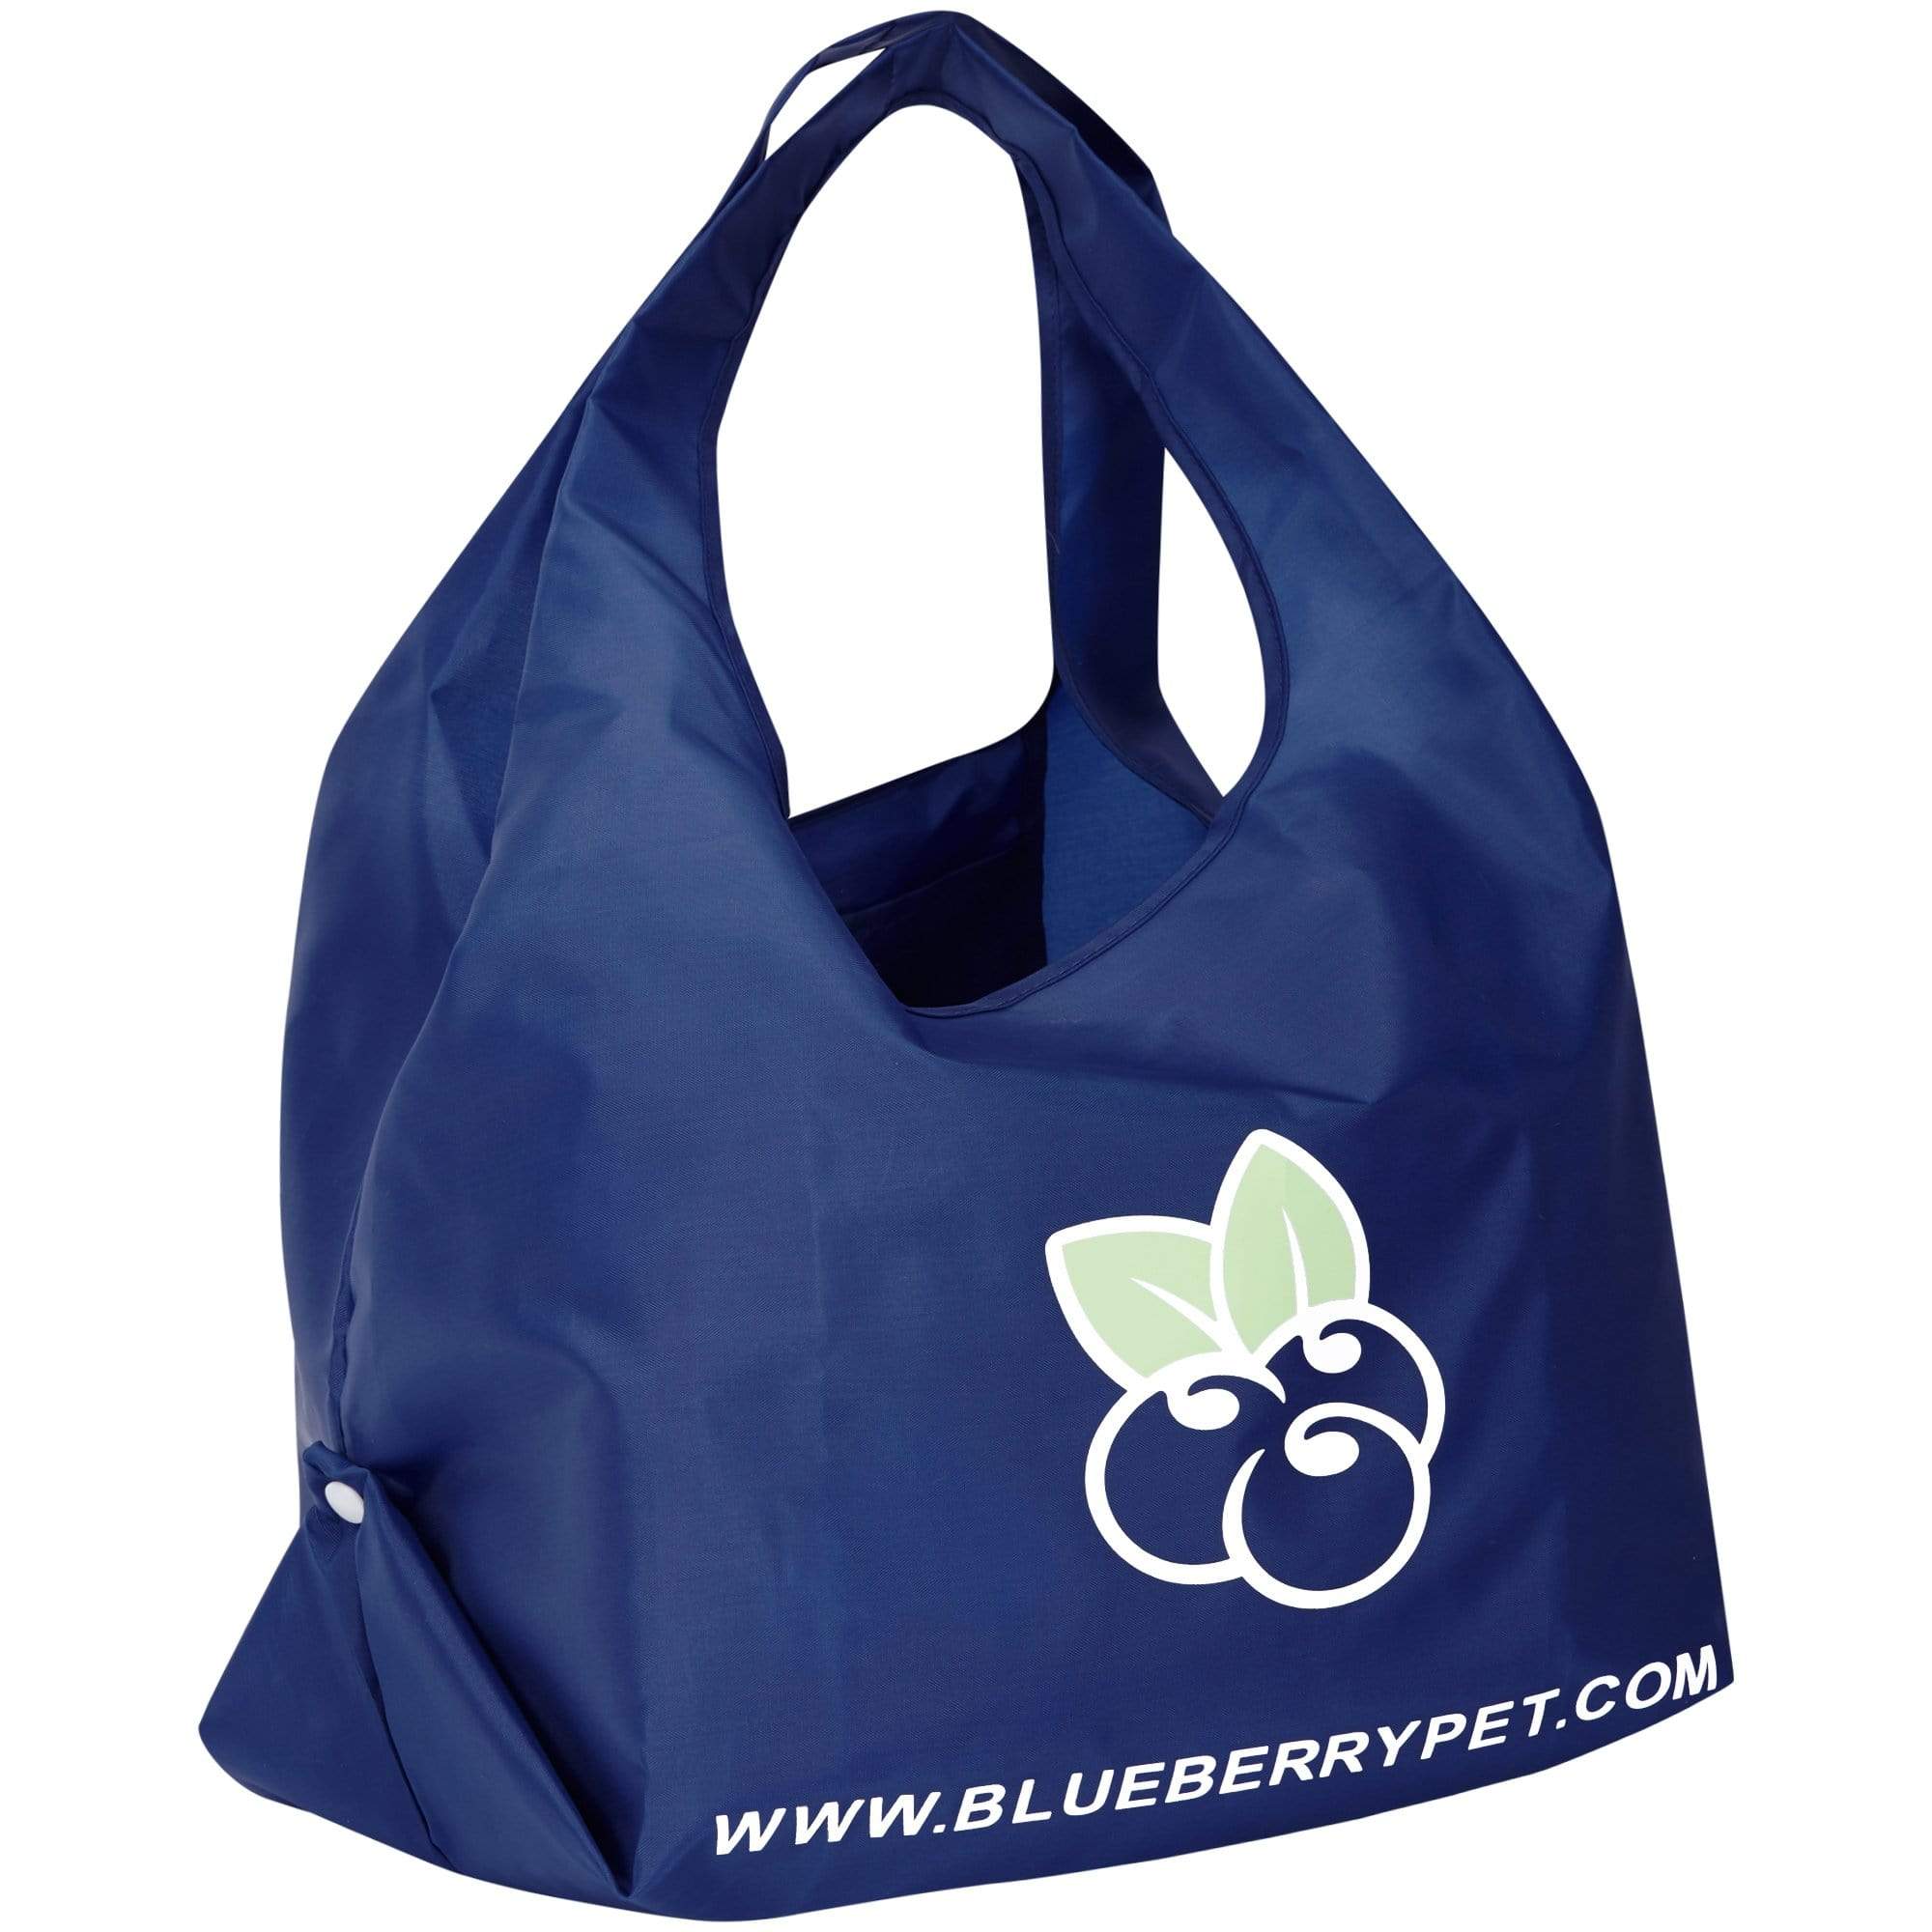 ReBag Reusable Blue Thermal Grocery Shopping Bag - 25/Case